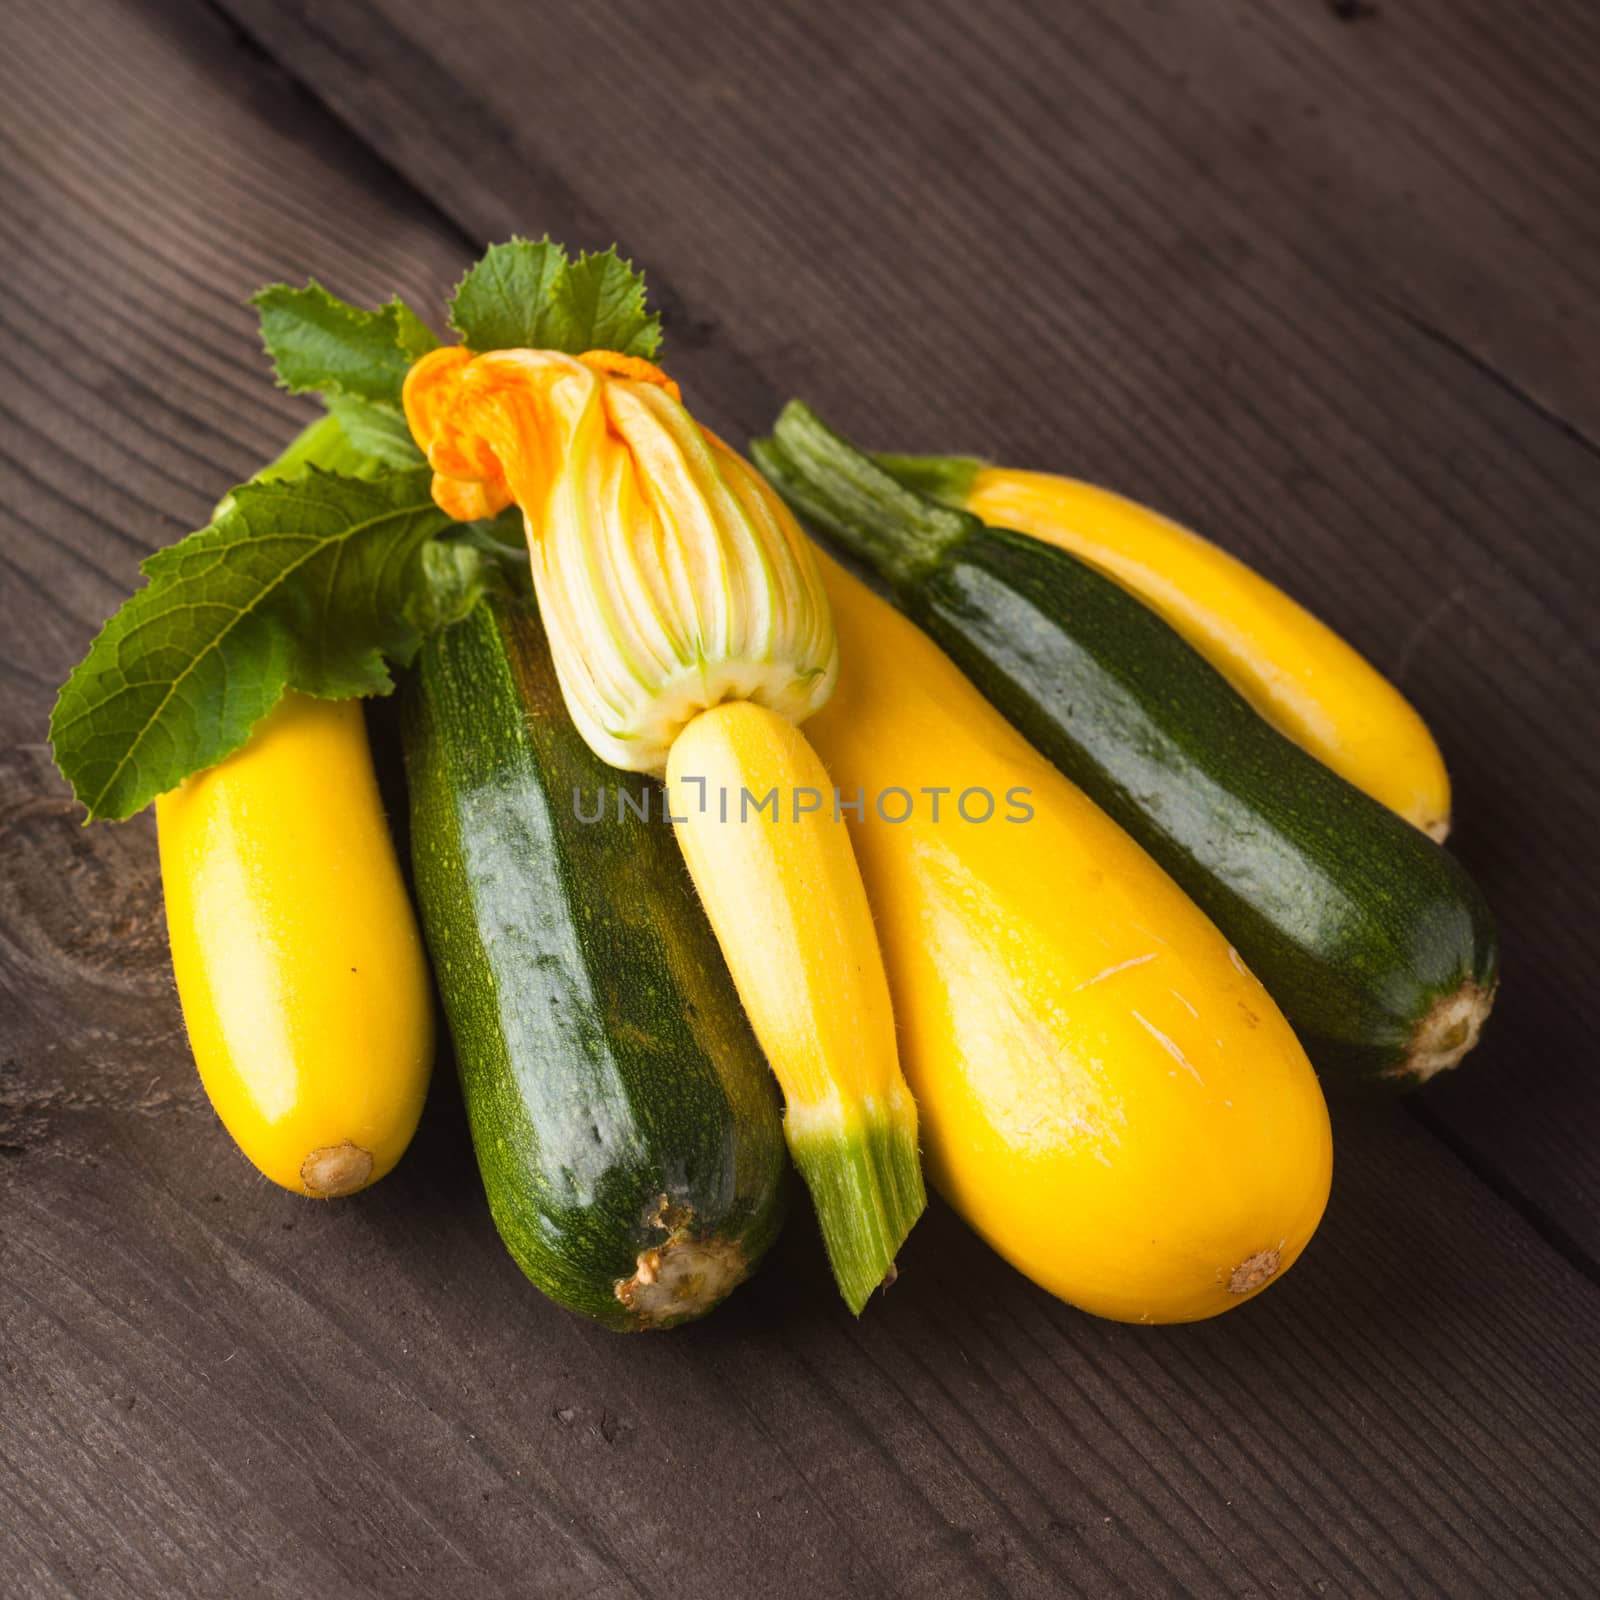 Yellow and green zucchini by oksix